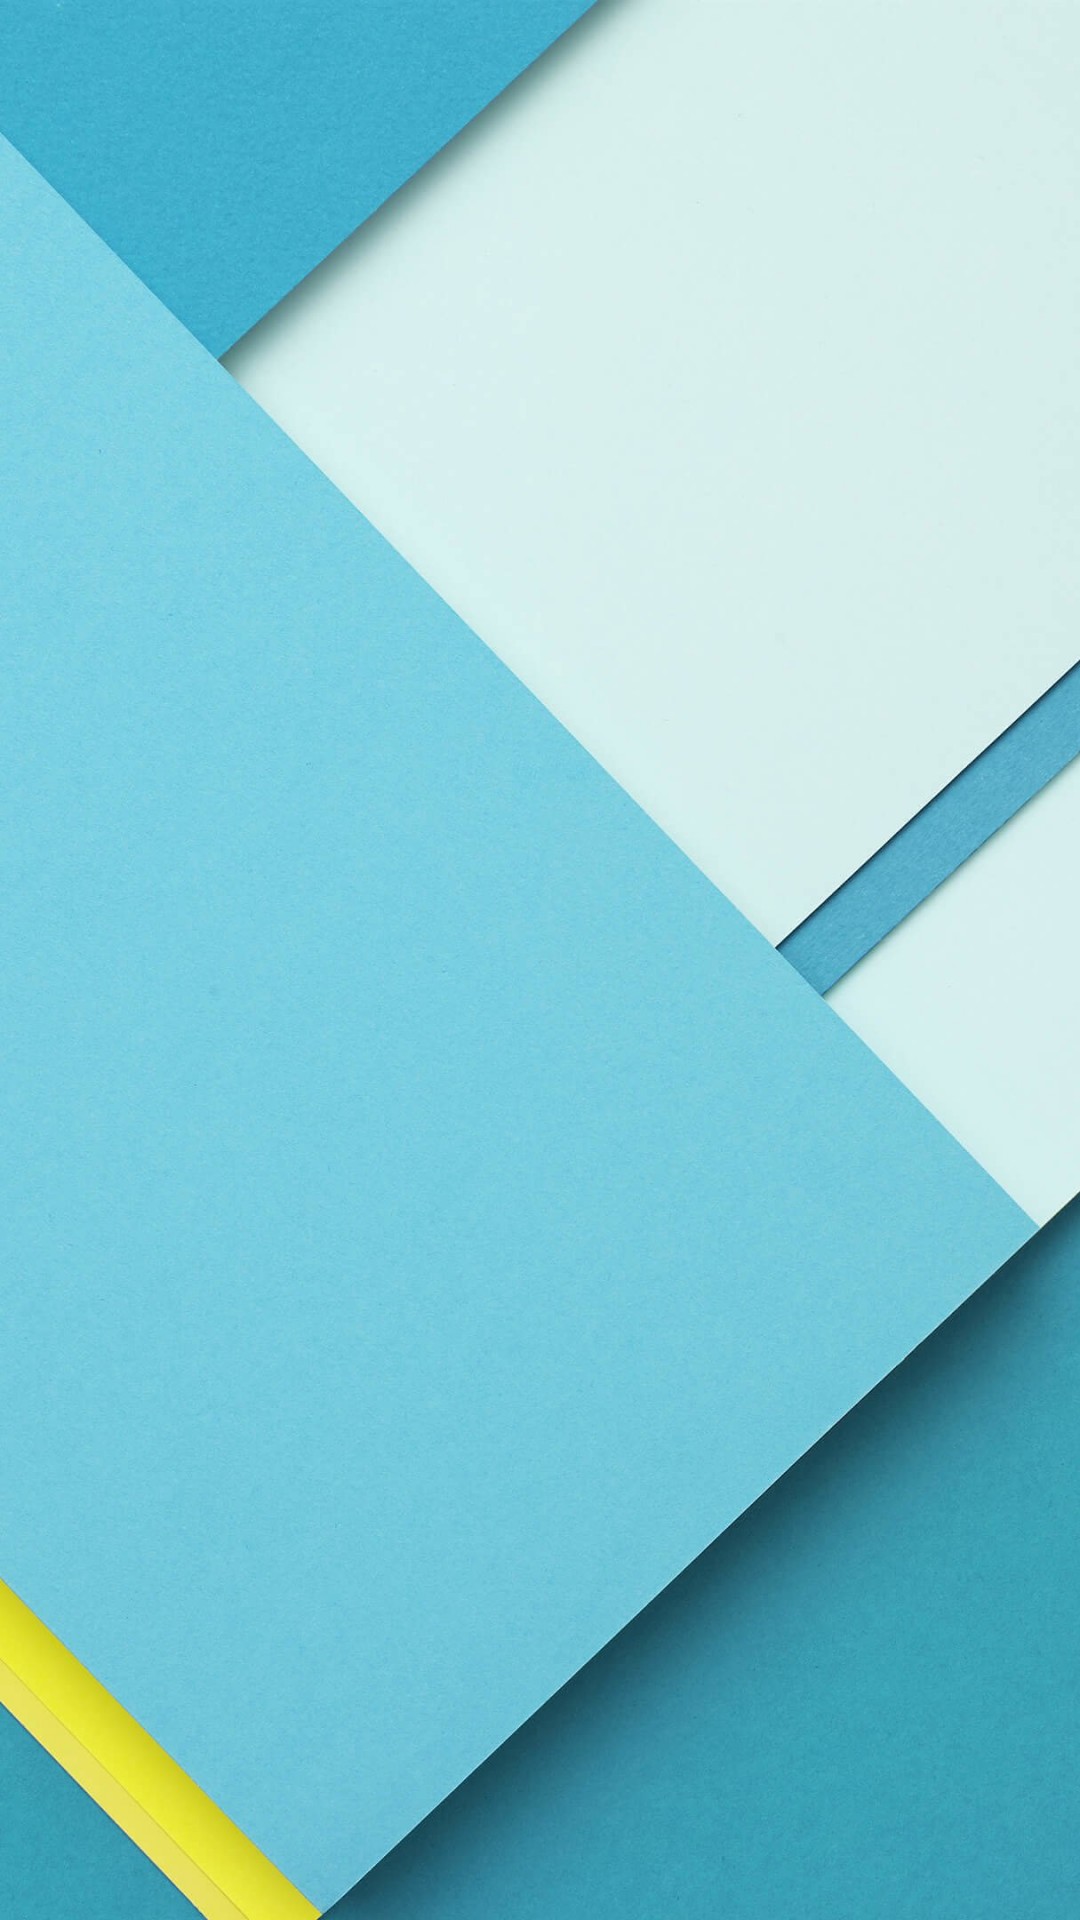 Google Material Design Wallpaper for Google Nexus 5X